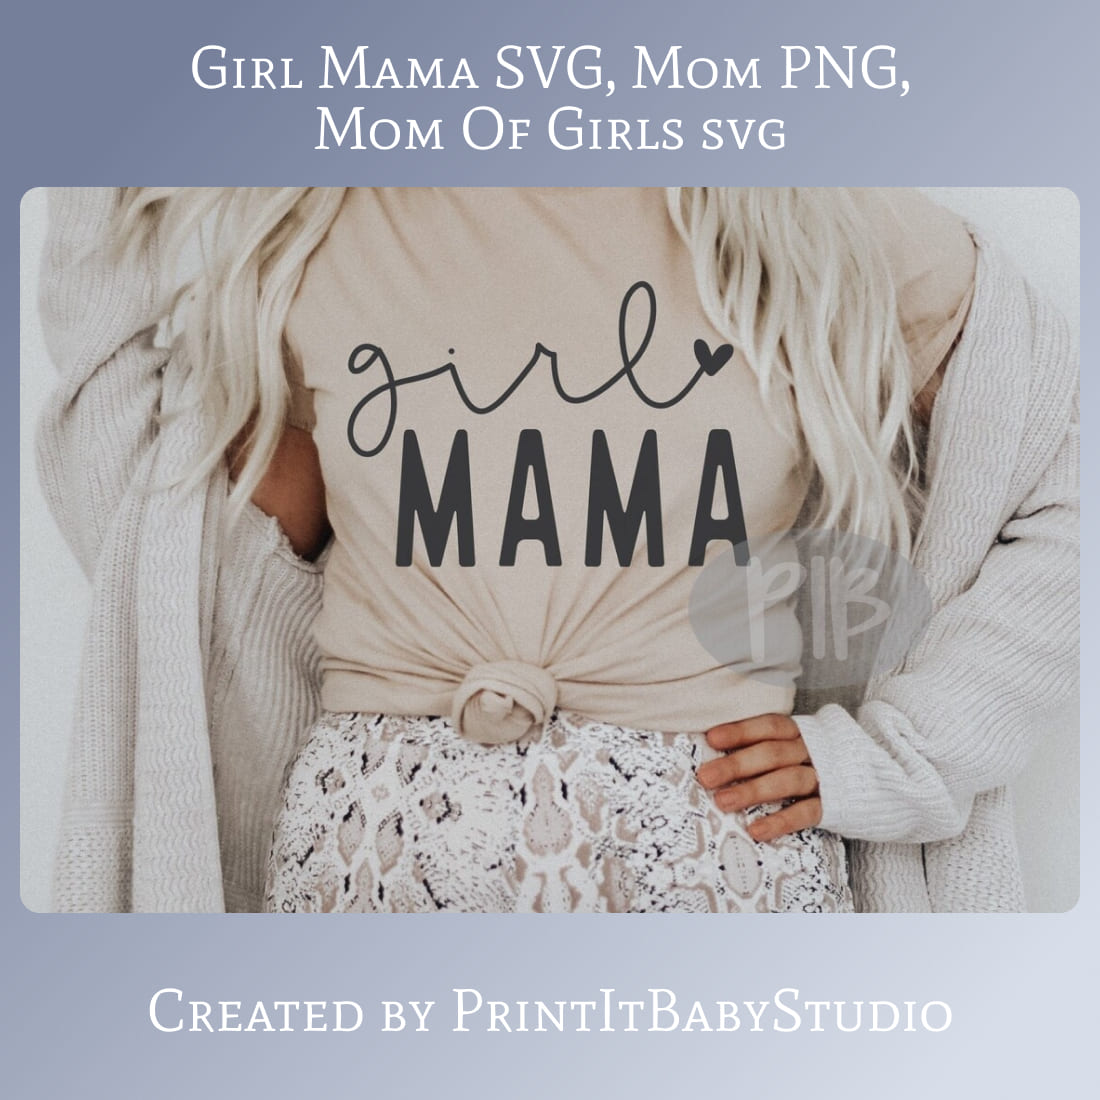 Girl Mama SVG main cover.